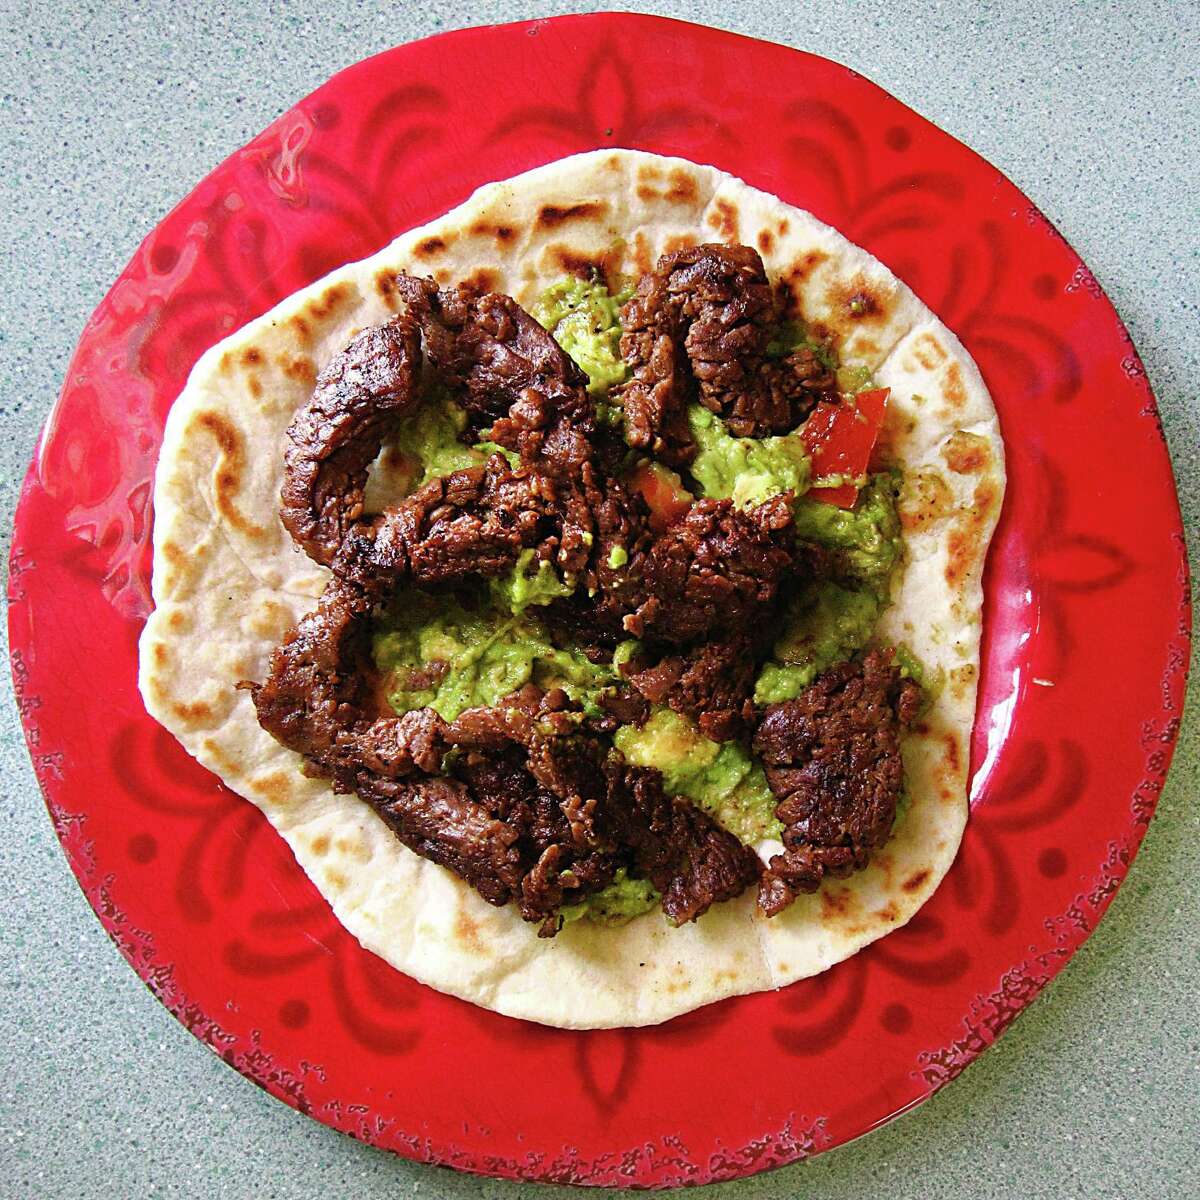 Beef fajita taco with guacamole on a handmade flour tortilla from Mendez Cafe.